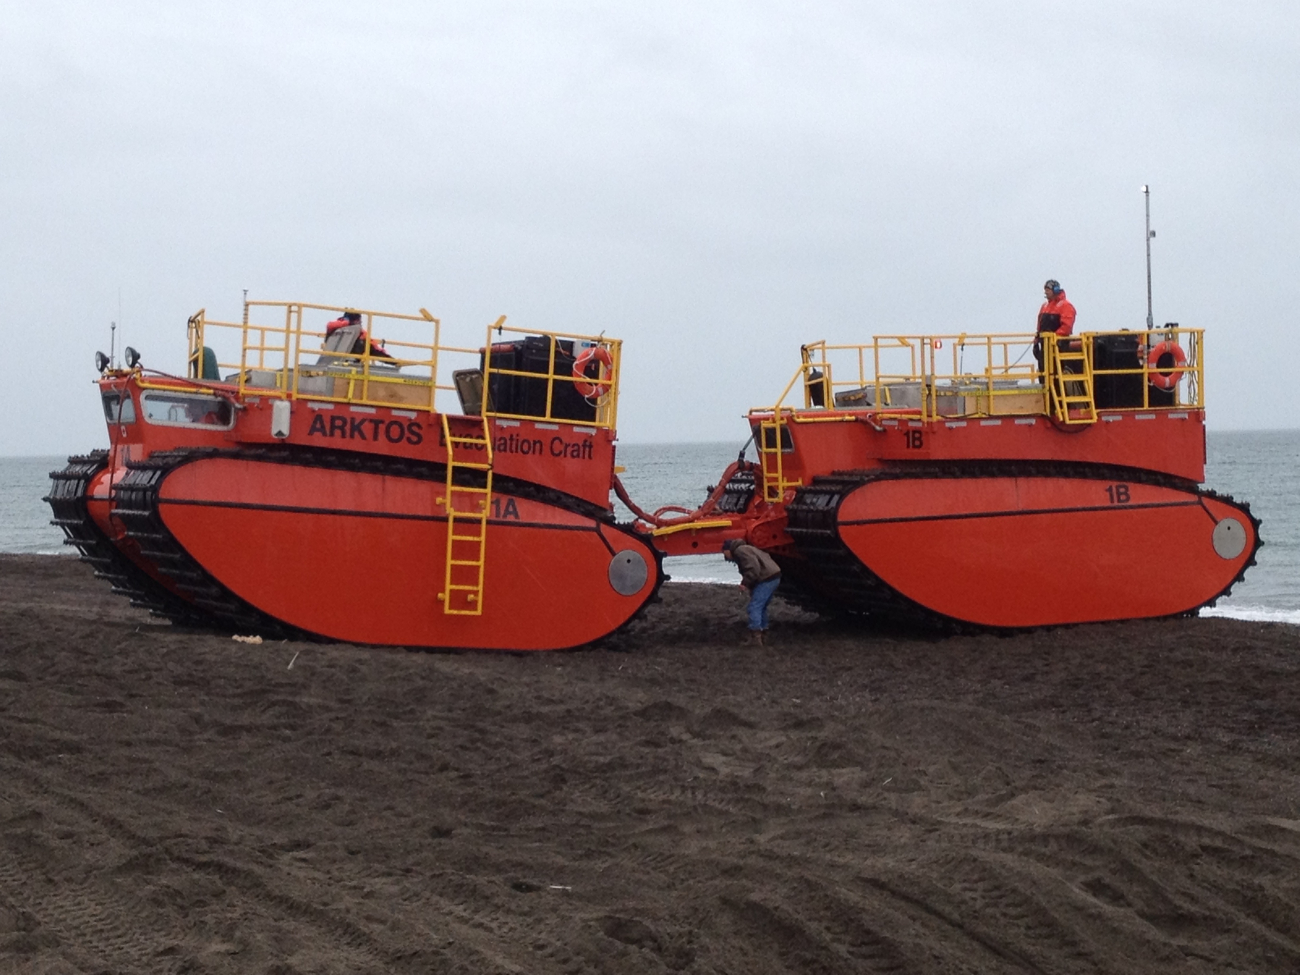 Arktos Evacuation Craft on land at Point Barrow